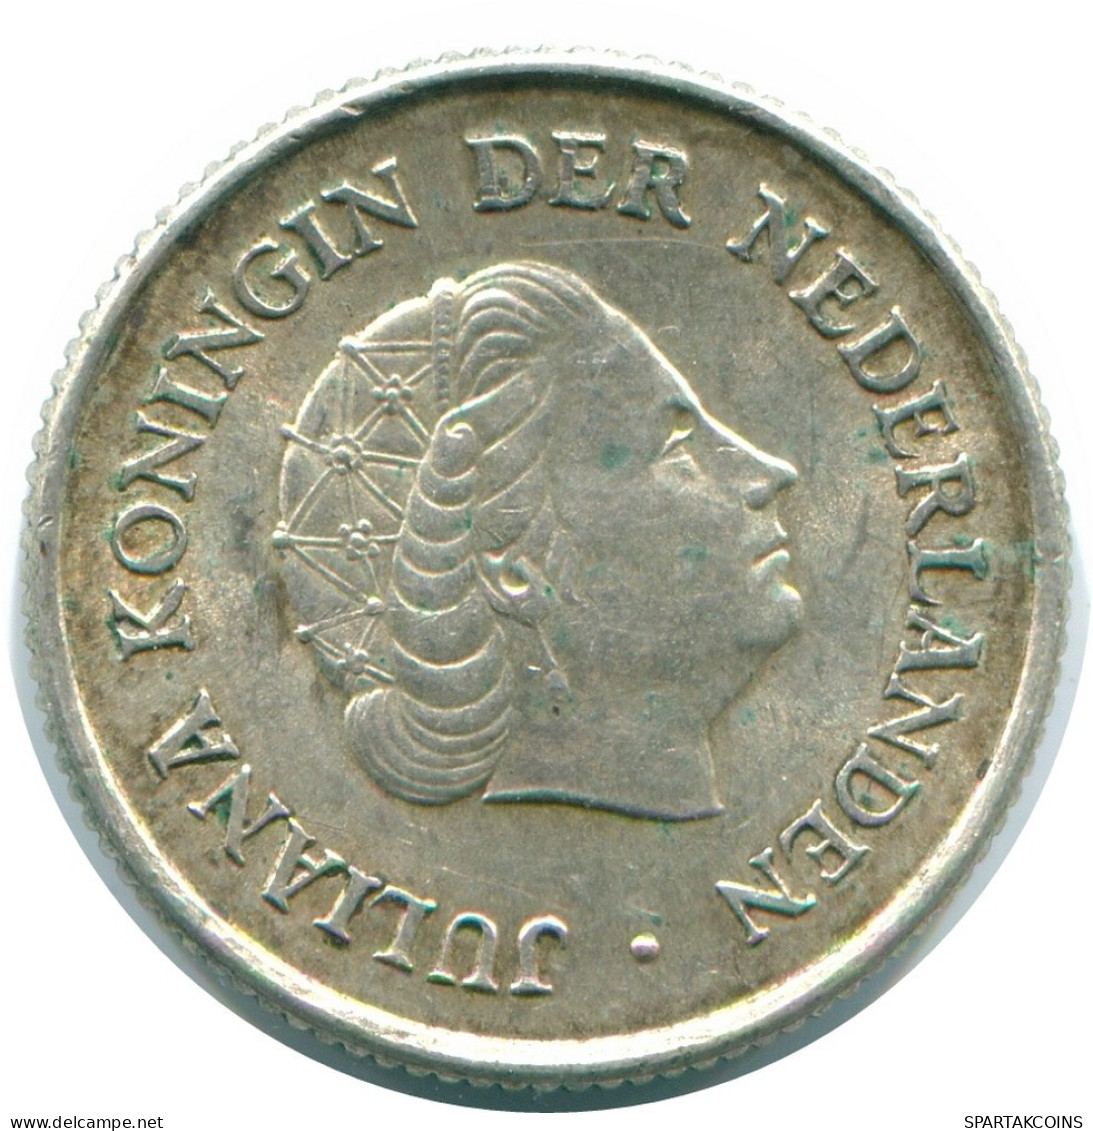 1/4 GULDEN 1963 NETHERLANDS ANTILLES SILVER Colonial Coin #NL11216.4.U.A - Netherlands Antilles